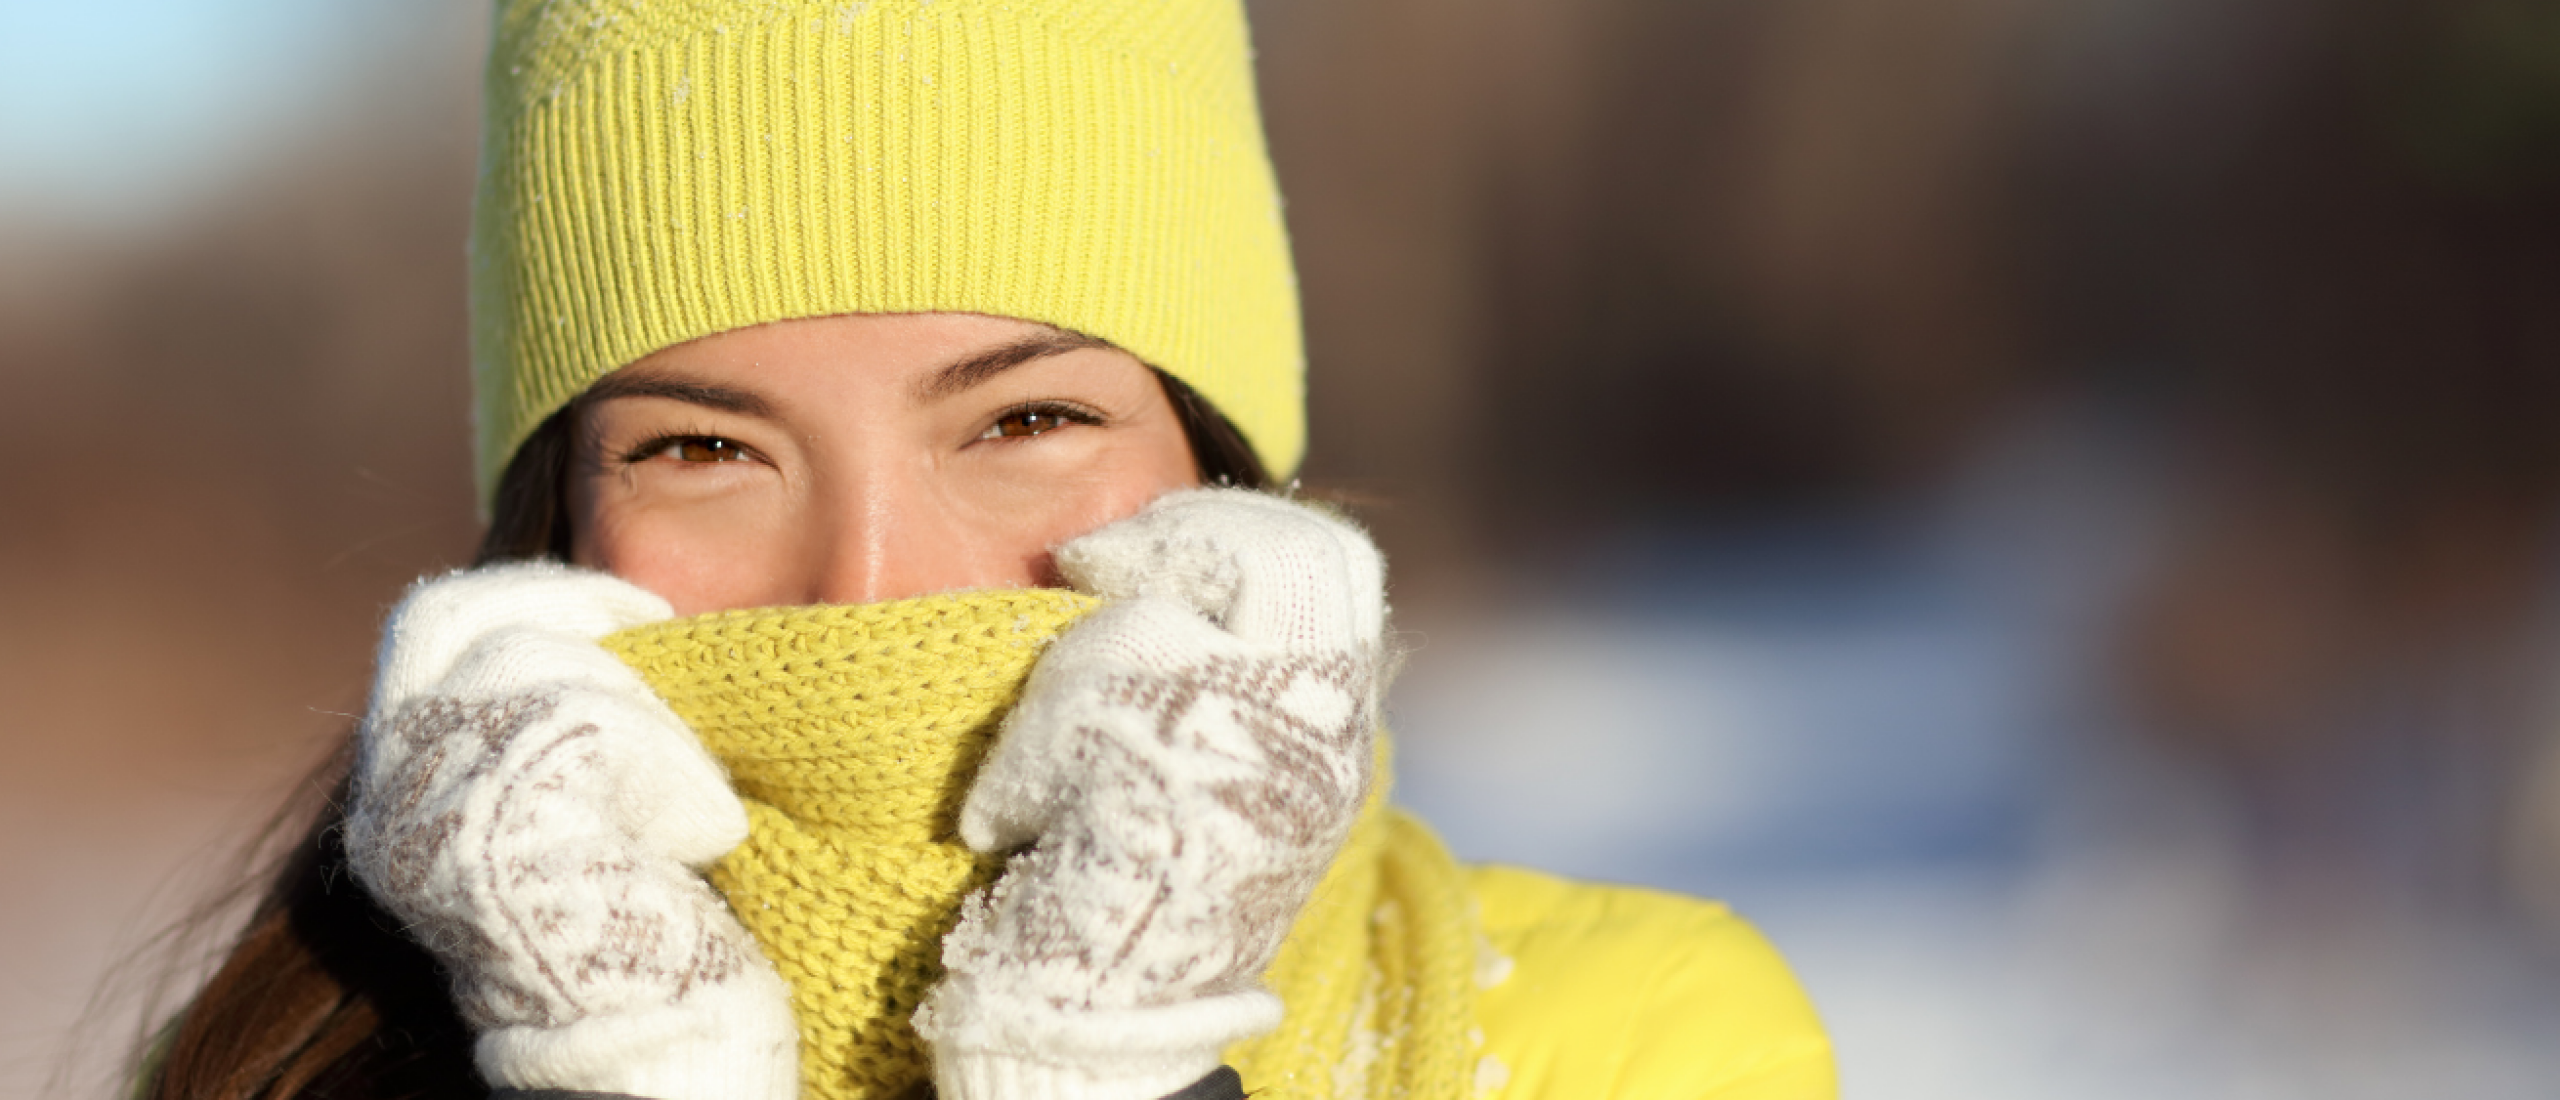 Hoe je je huid kan beschermen tegen de kou!